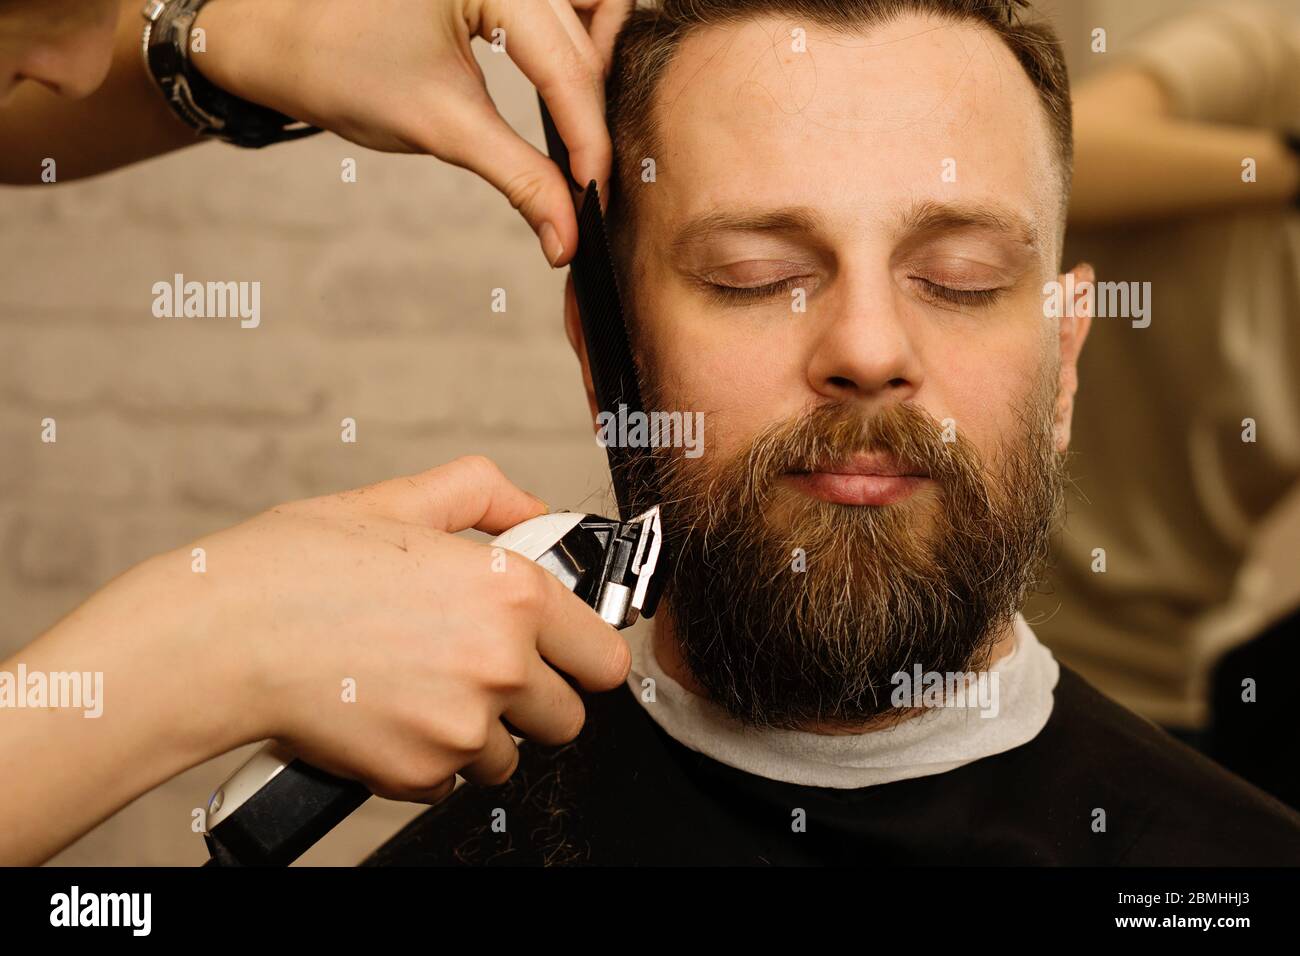 trimming beard with electric razor